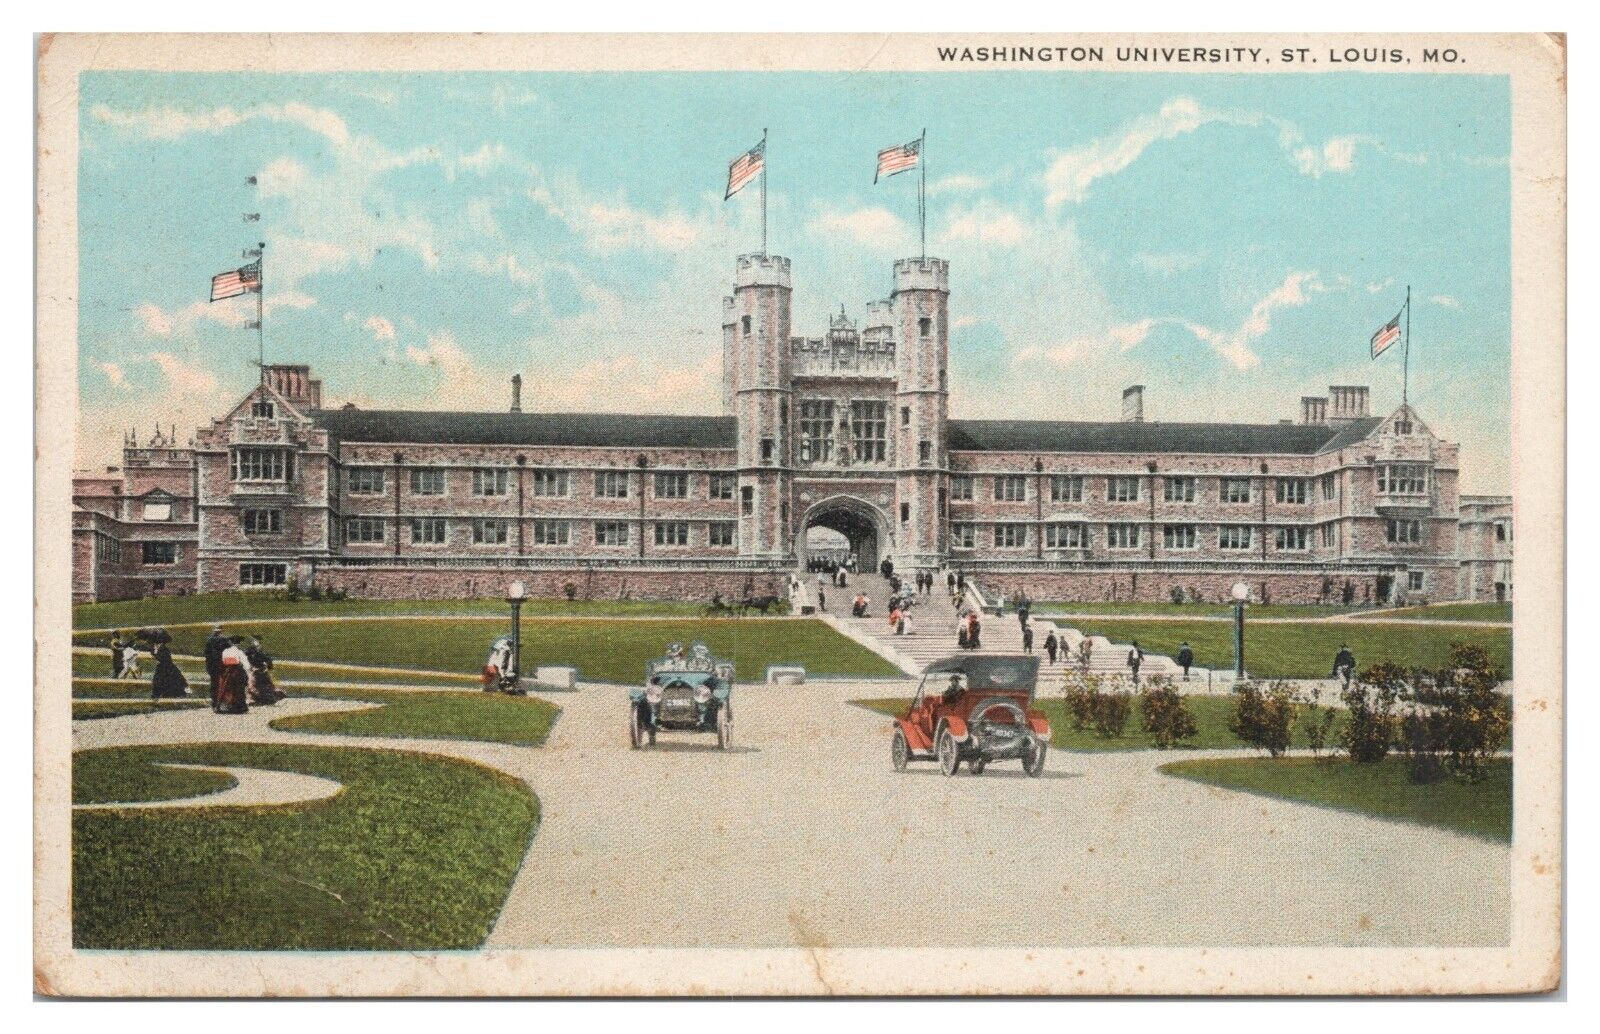 St. Louis Missouri Vintage Postcard c1923 Washington University from Front